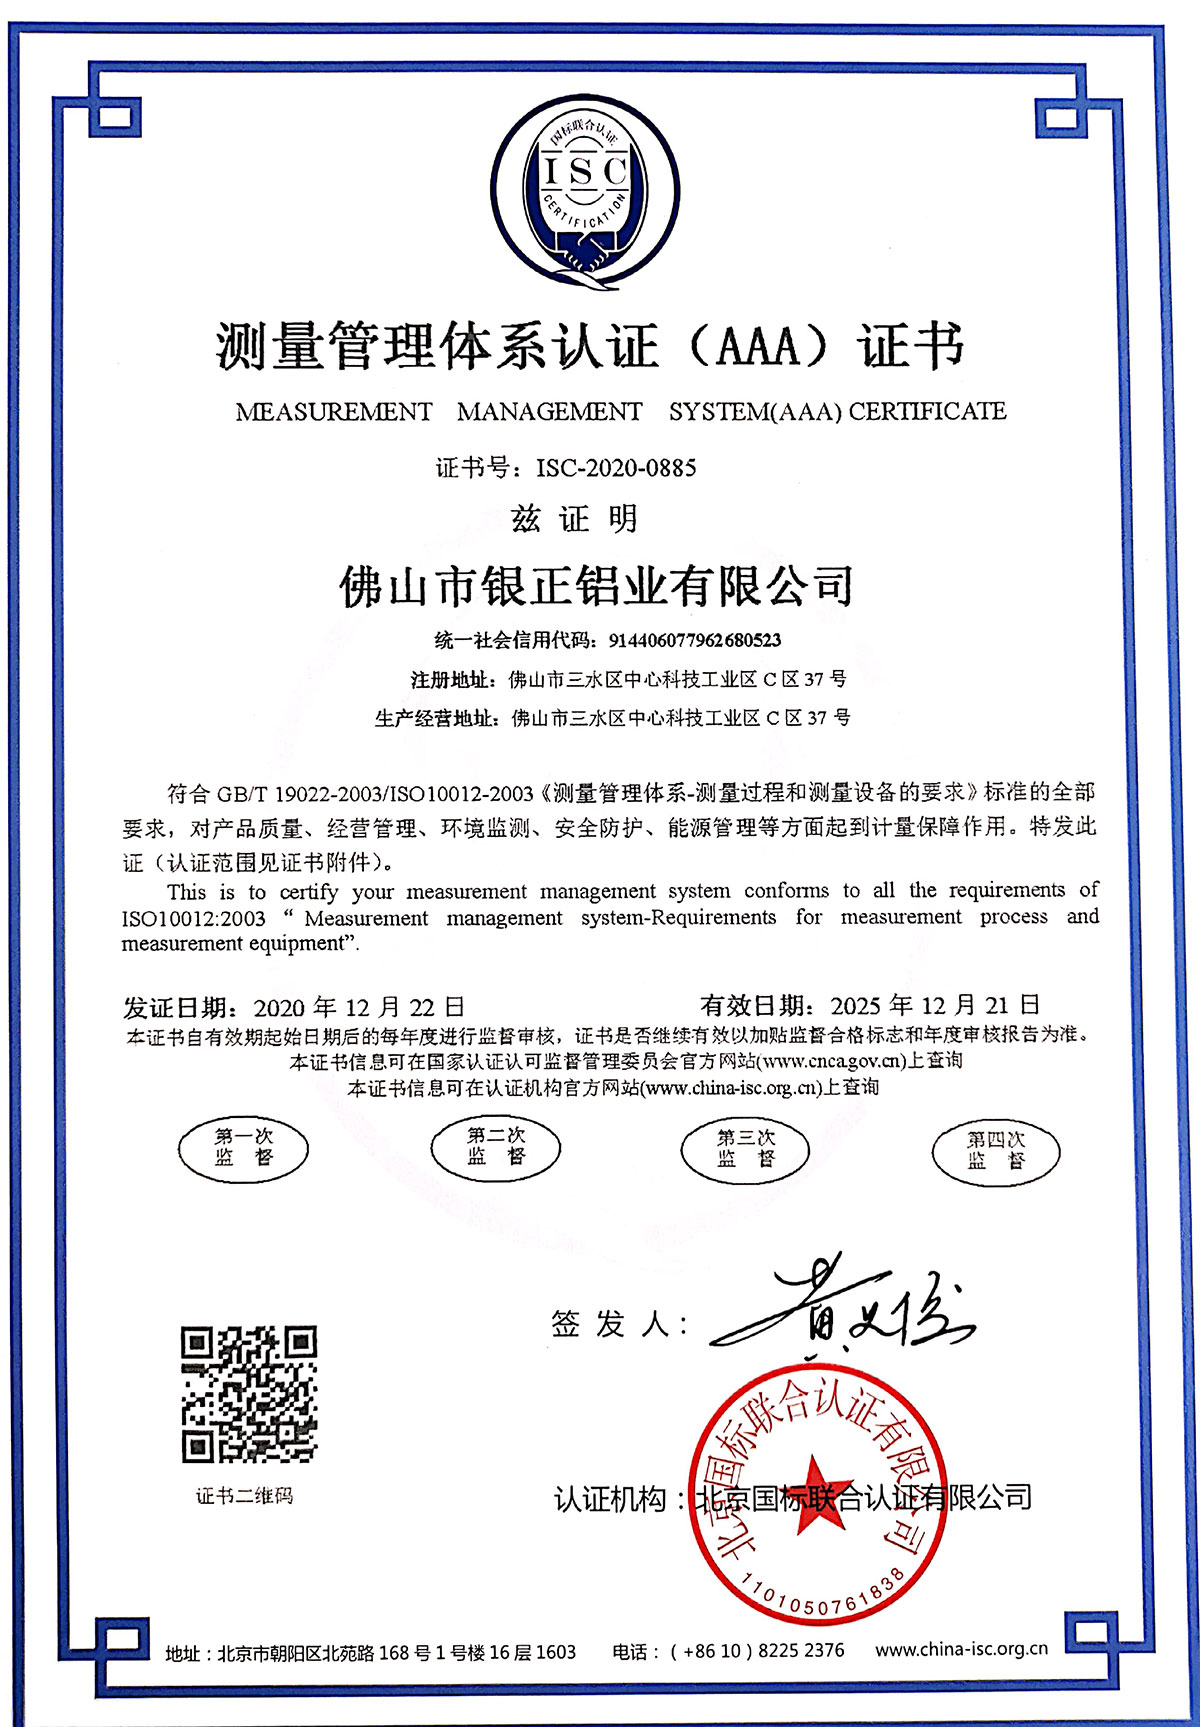 Measurement management system certificate